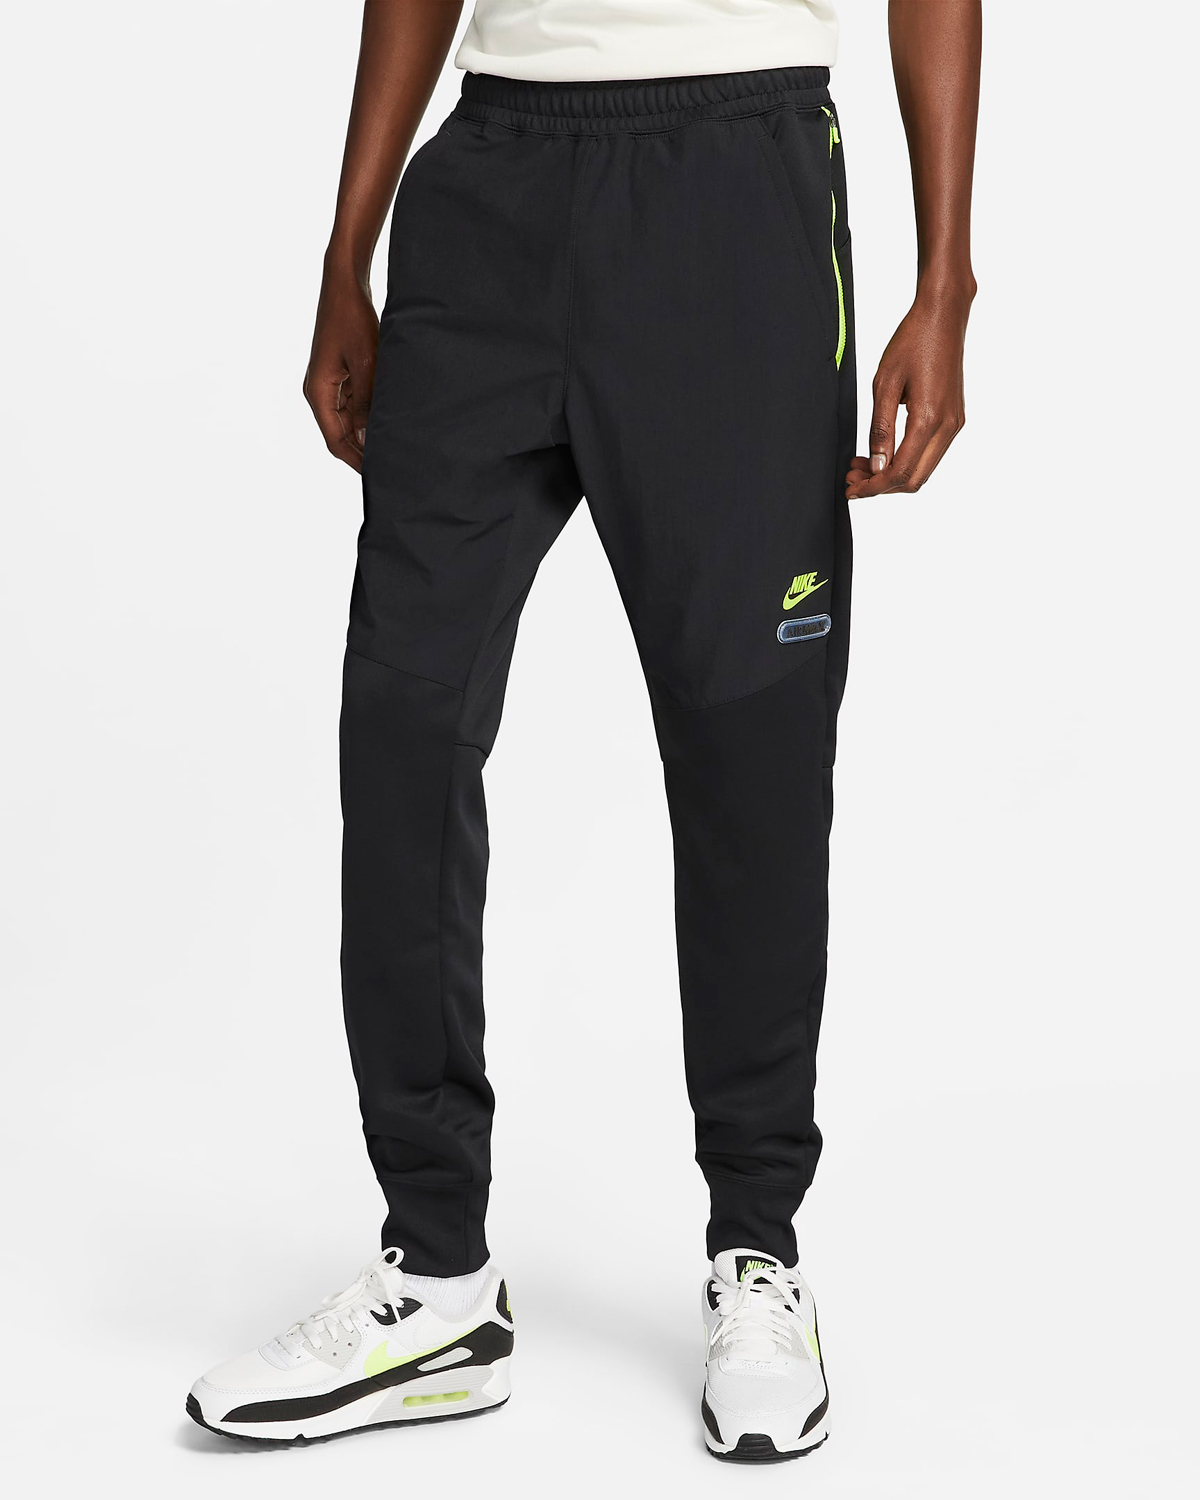 Nike-Sportswear-Air-Max-Joggers-Black-Volt